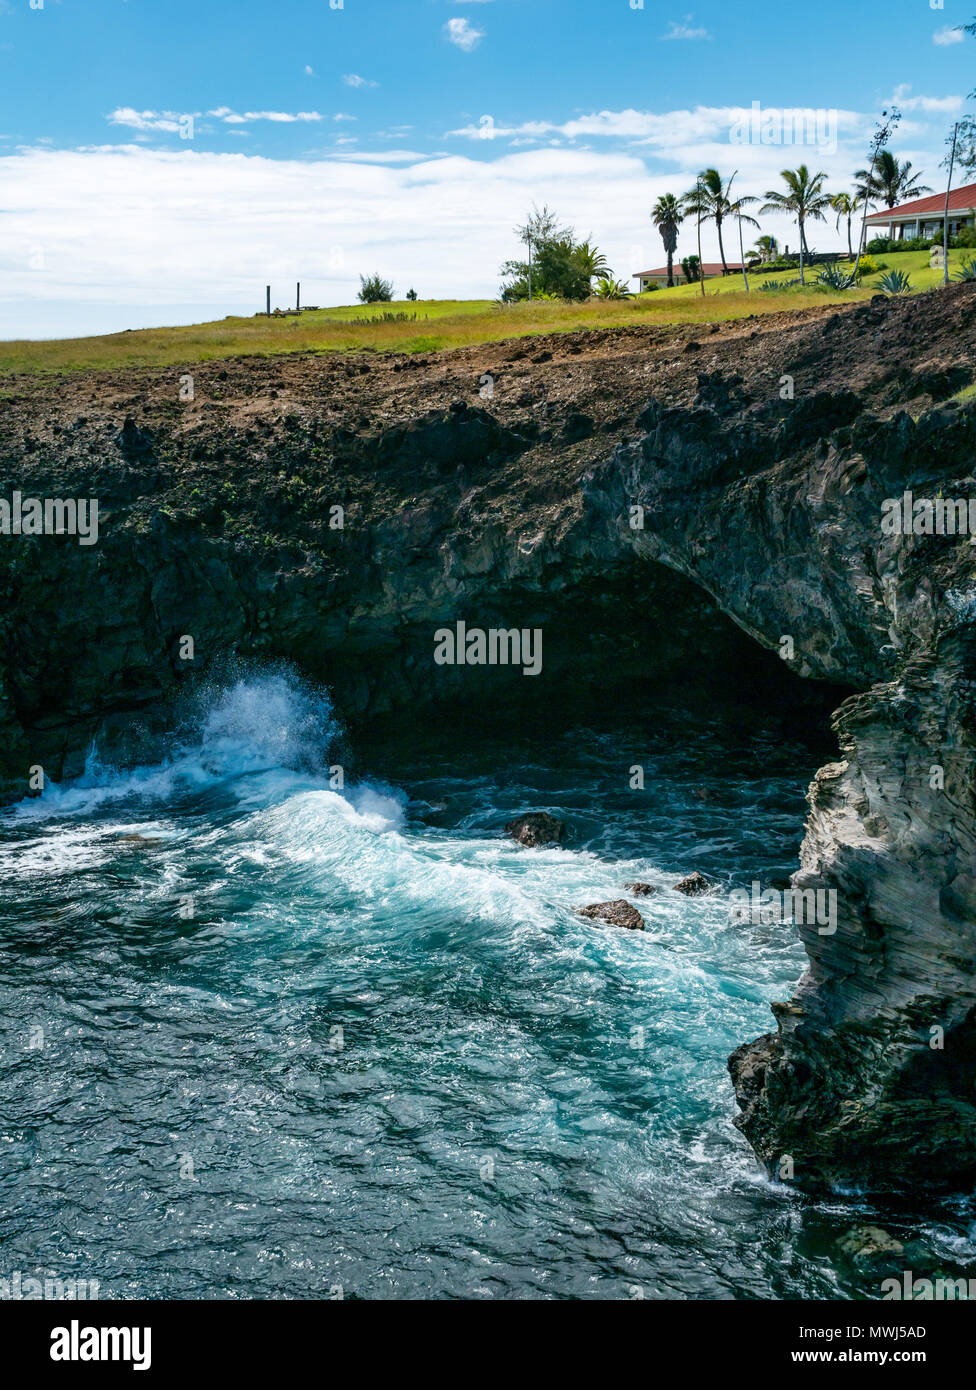 Grotta marina eroso da lava roccia vulcanica, coste rocciose a Ana Kai Tangata, Hanga Roa, Isola di Pasqua, Rapa Nui, Cile Foto Stock